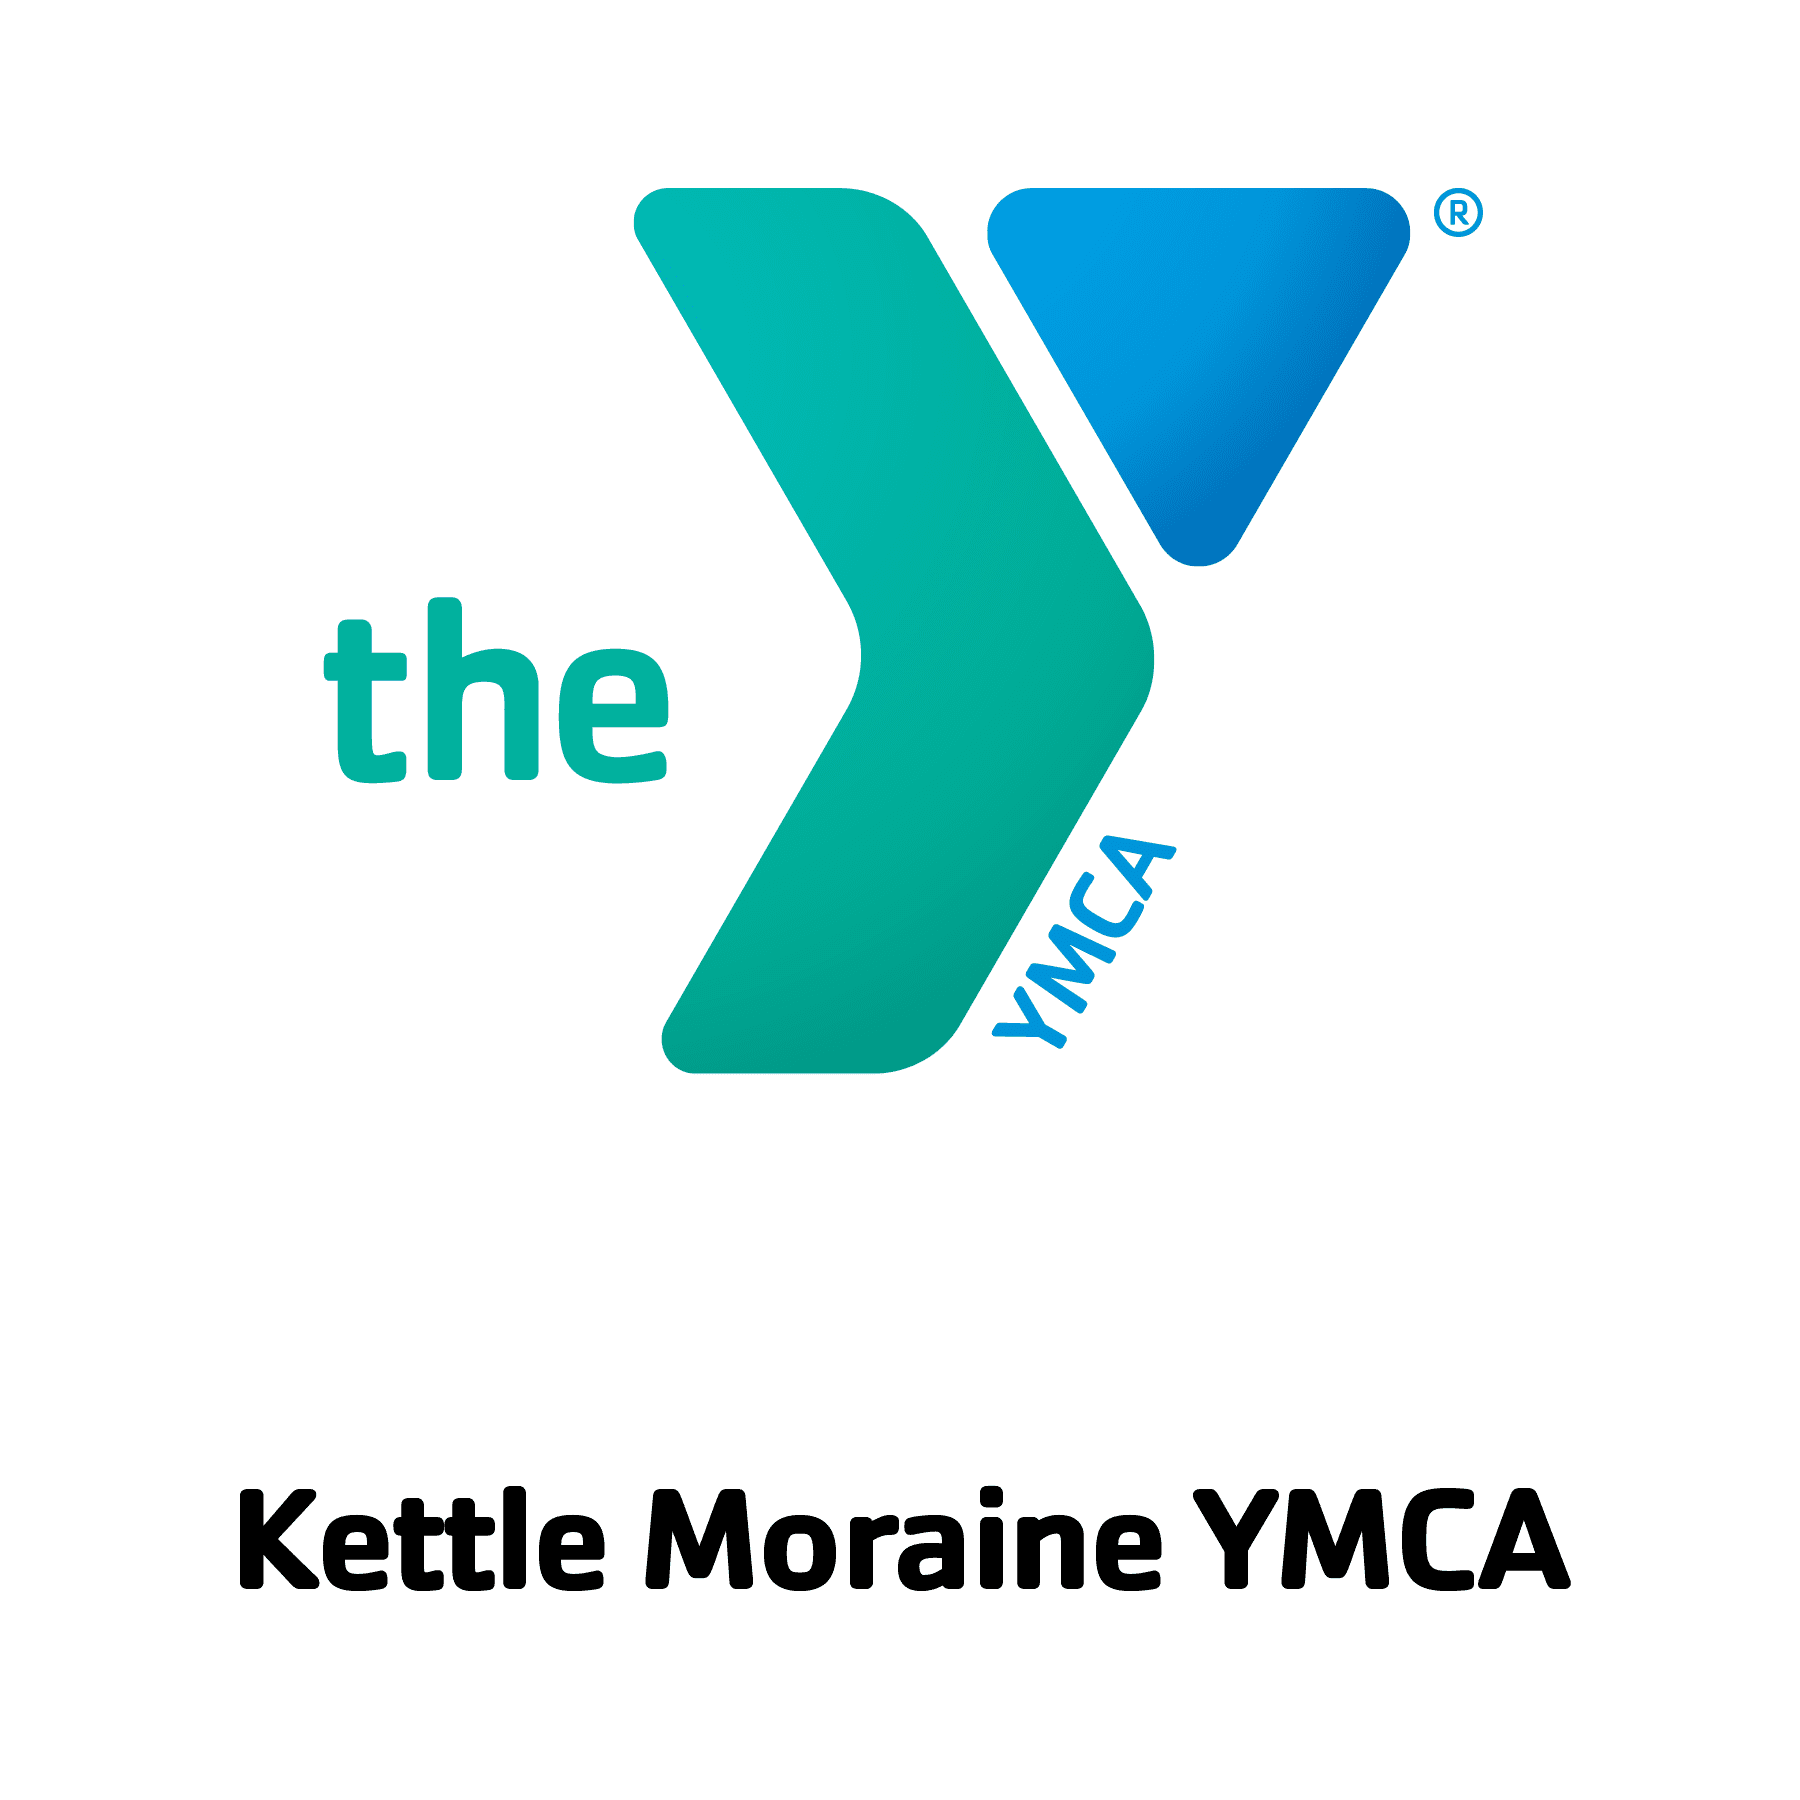 Kettle Moraine YMCA 01